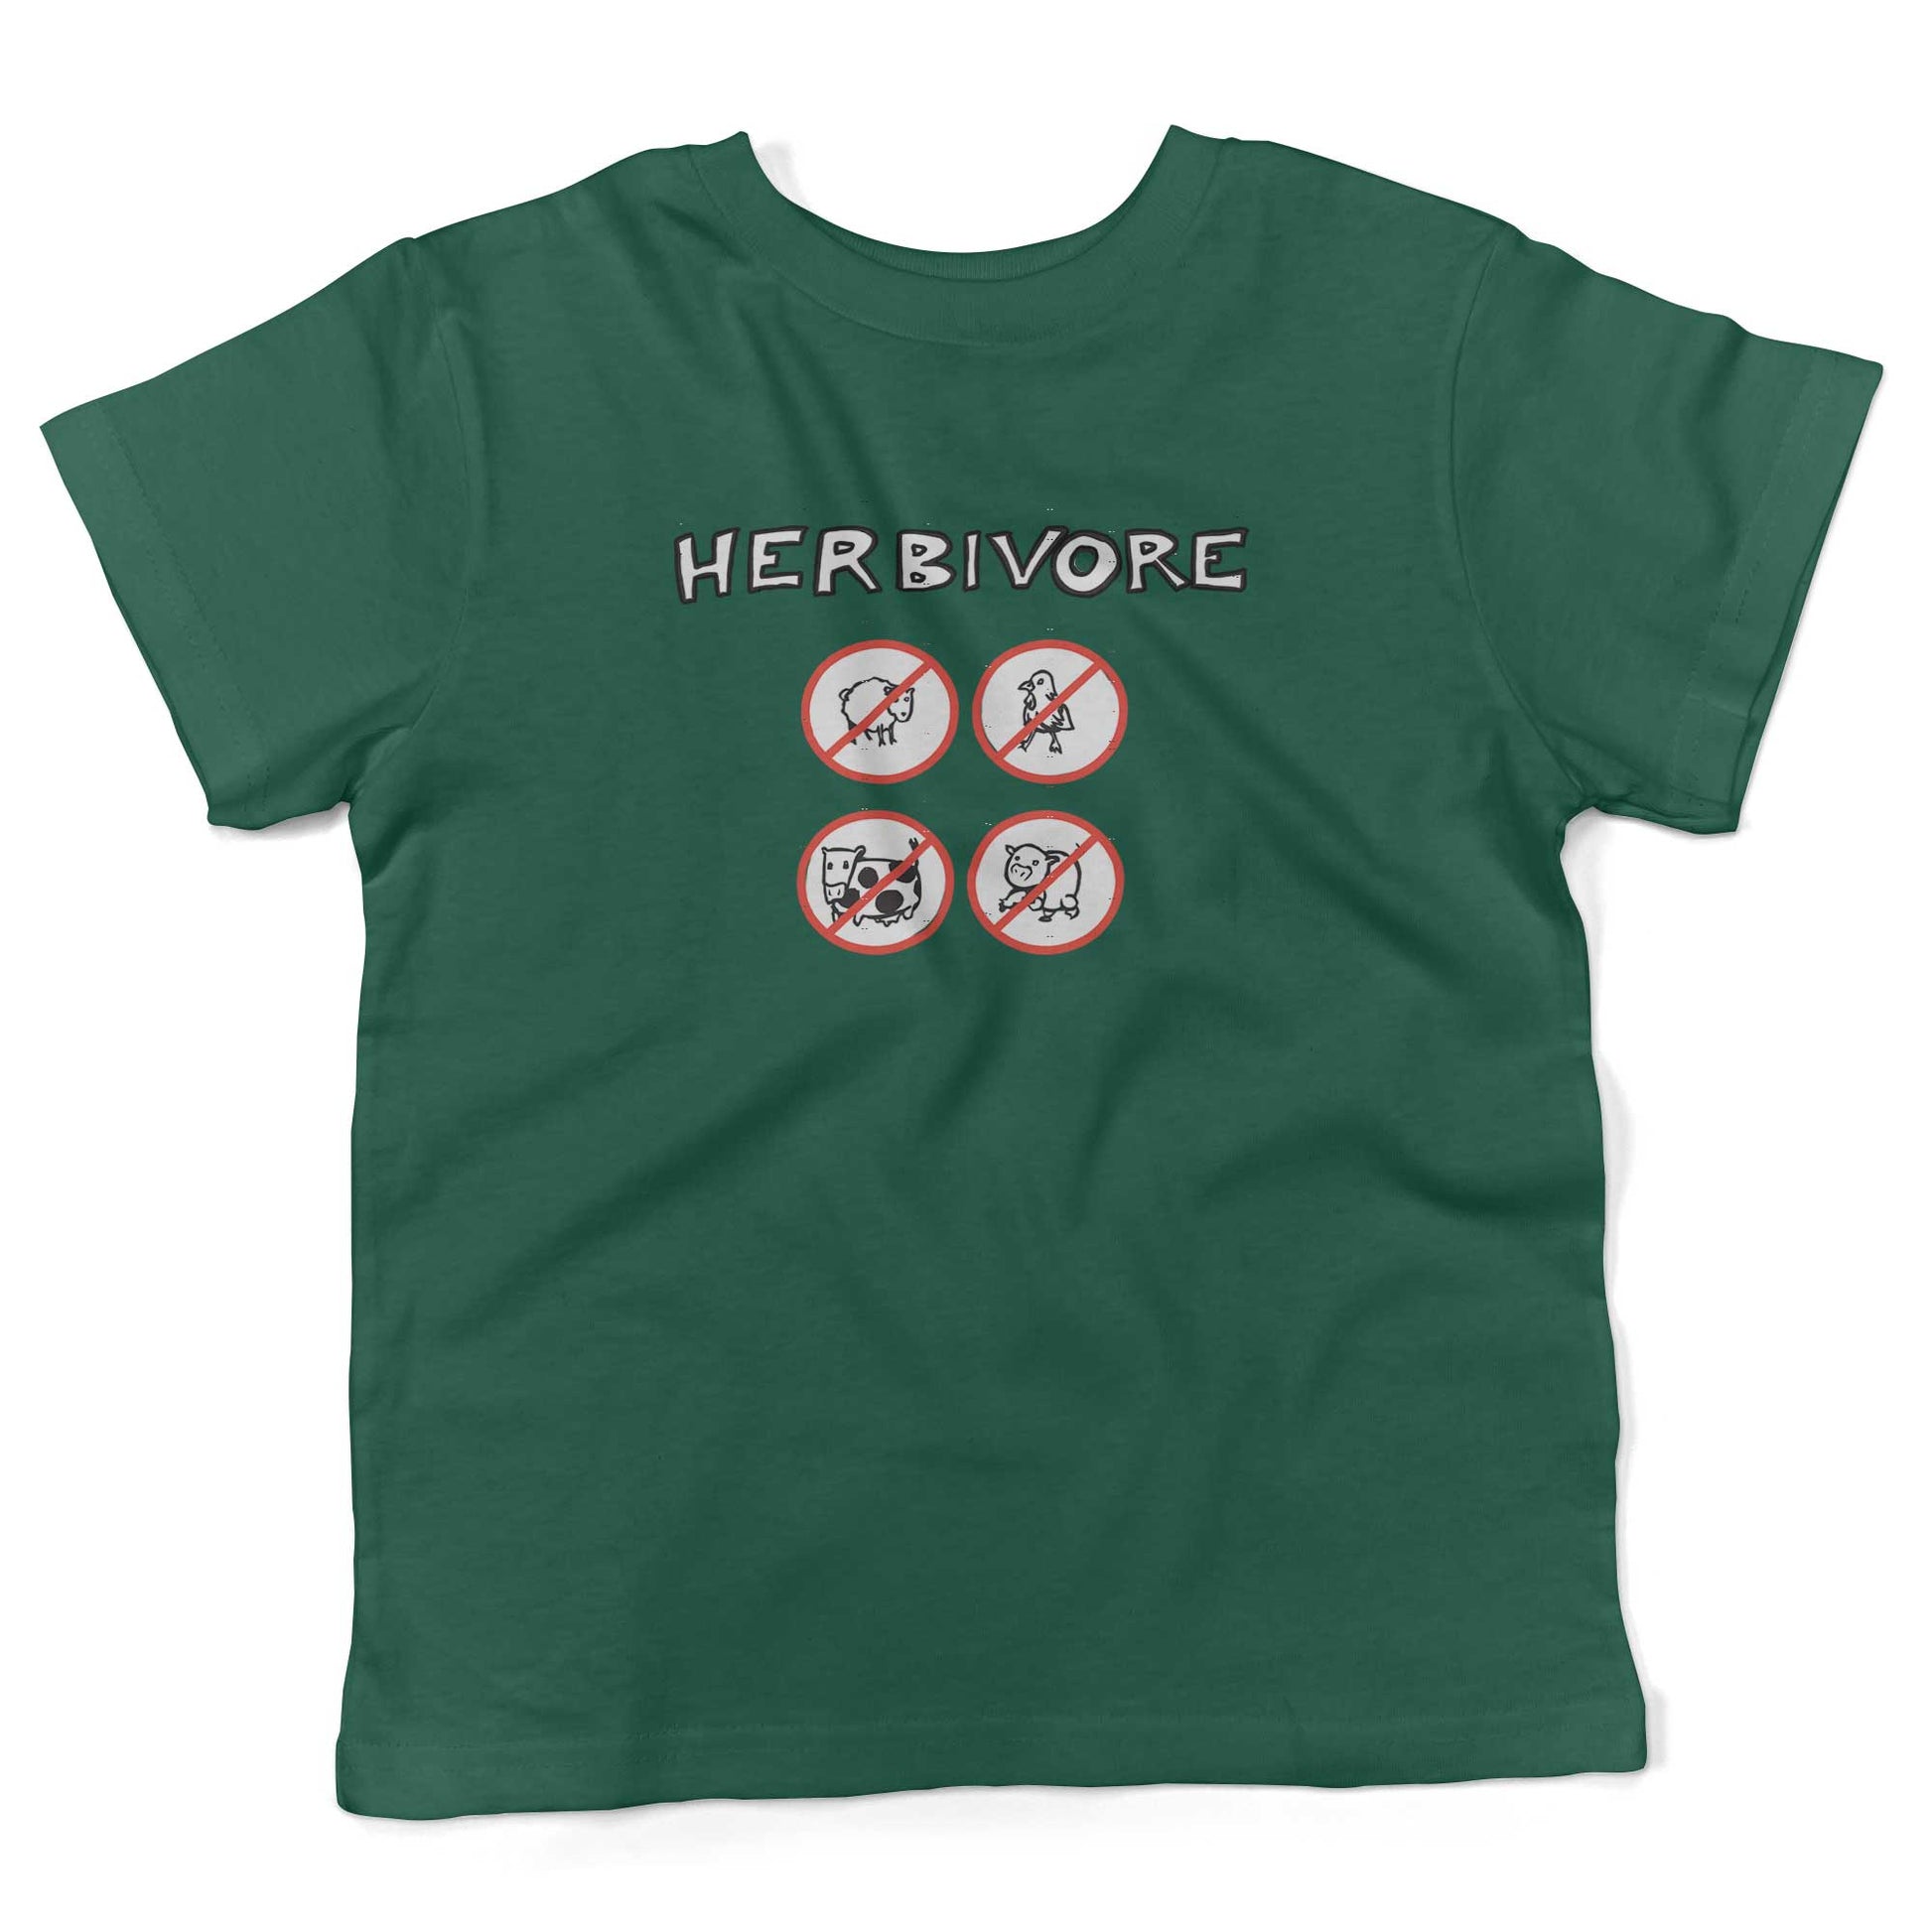 Herbivore Toddler Shirt-Kelly Green-2T